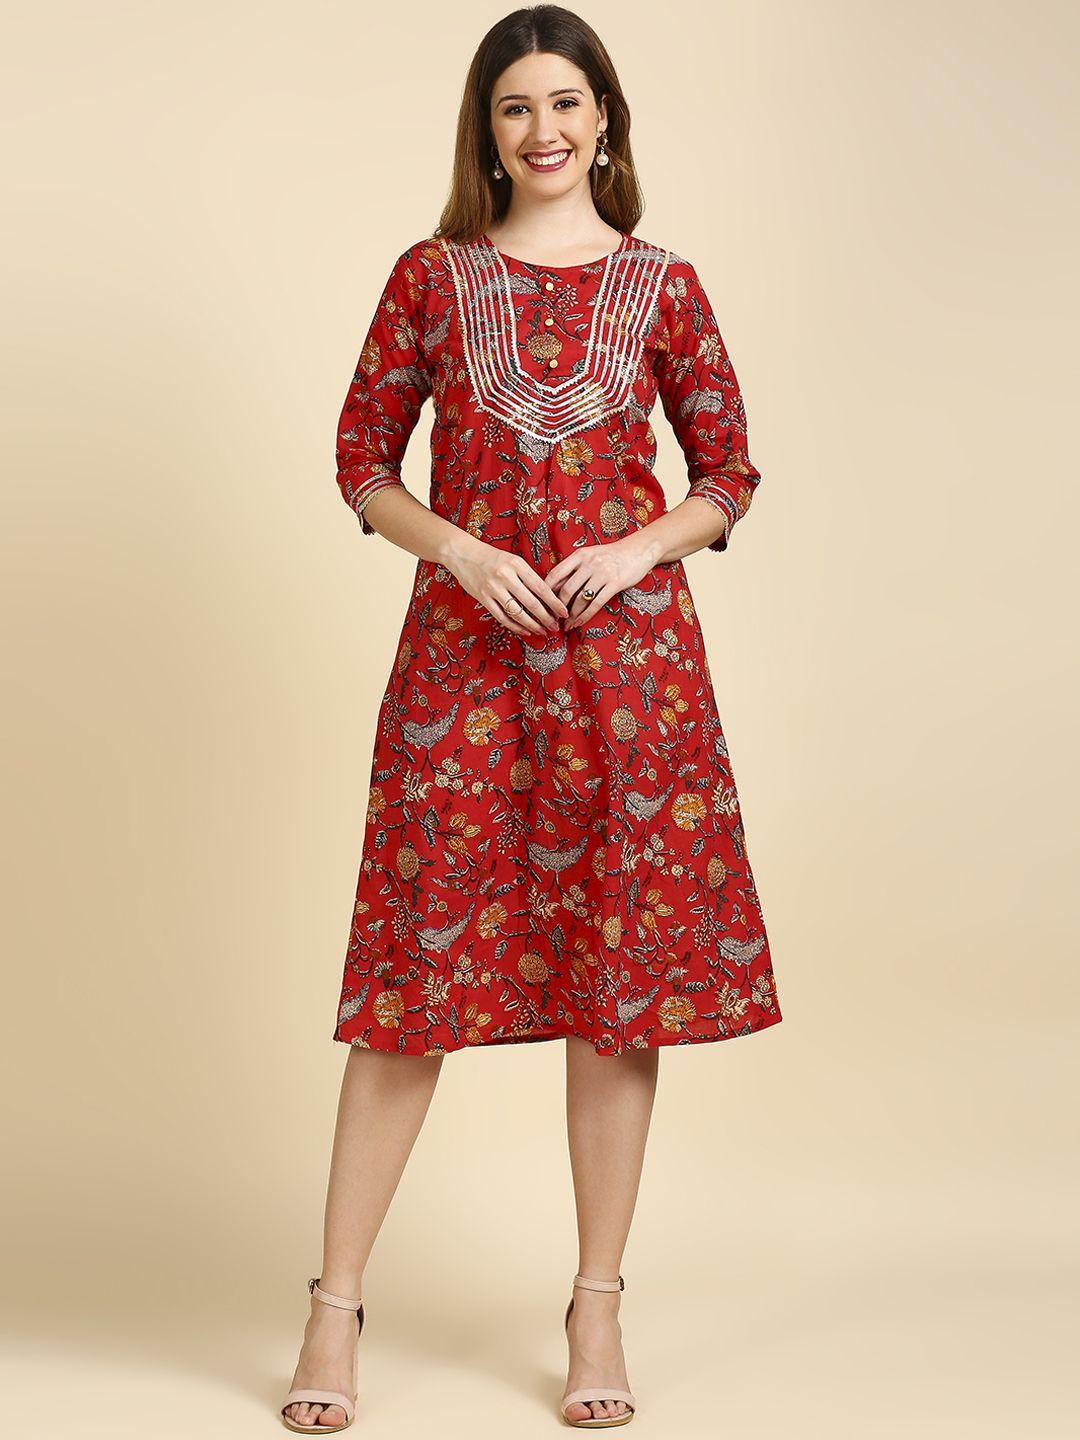 anubhutee-red-ethnic-motifs-a-line-midi-dress